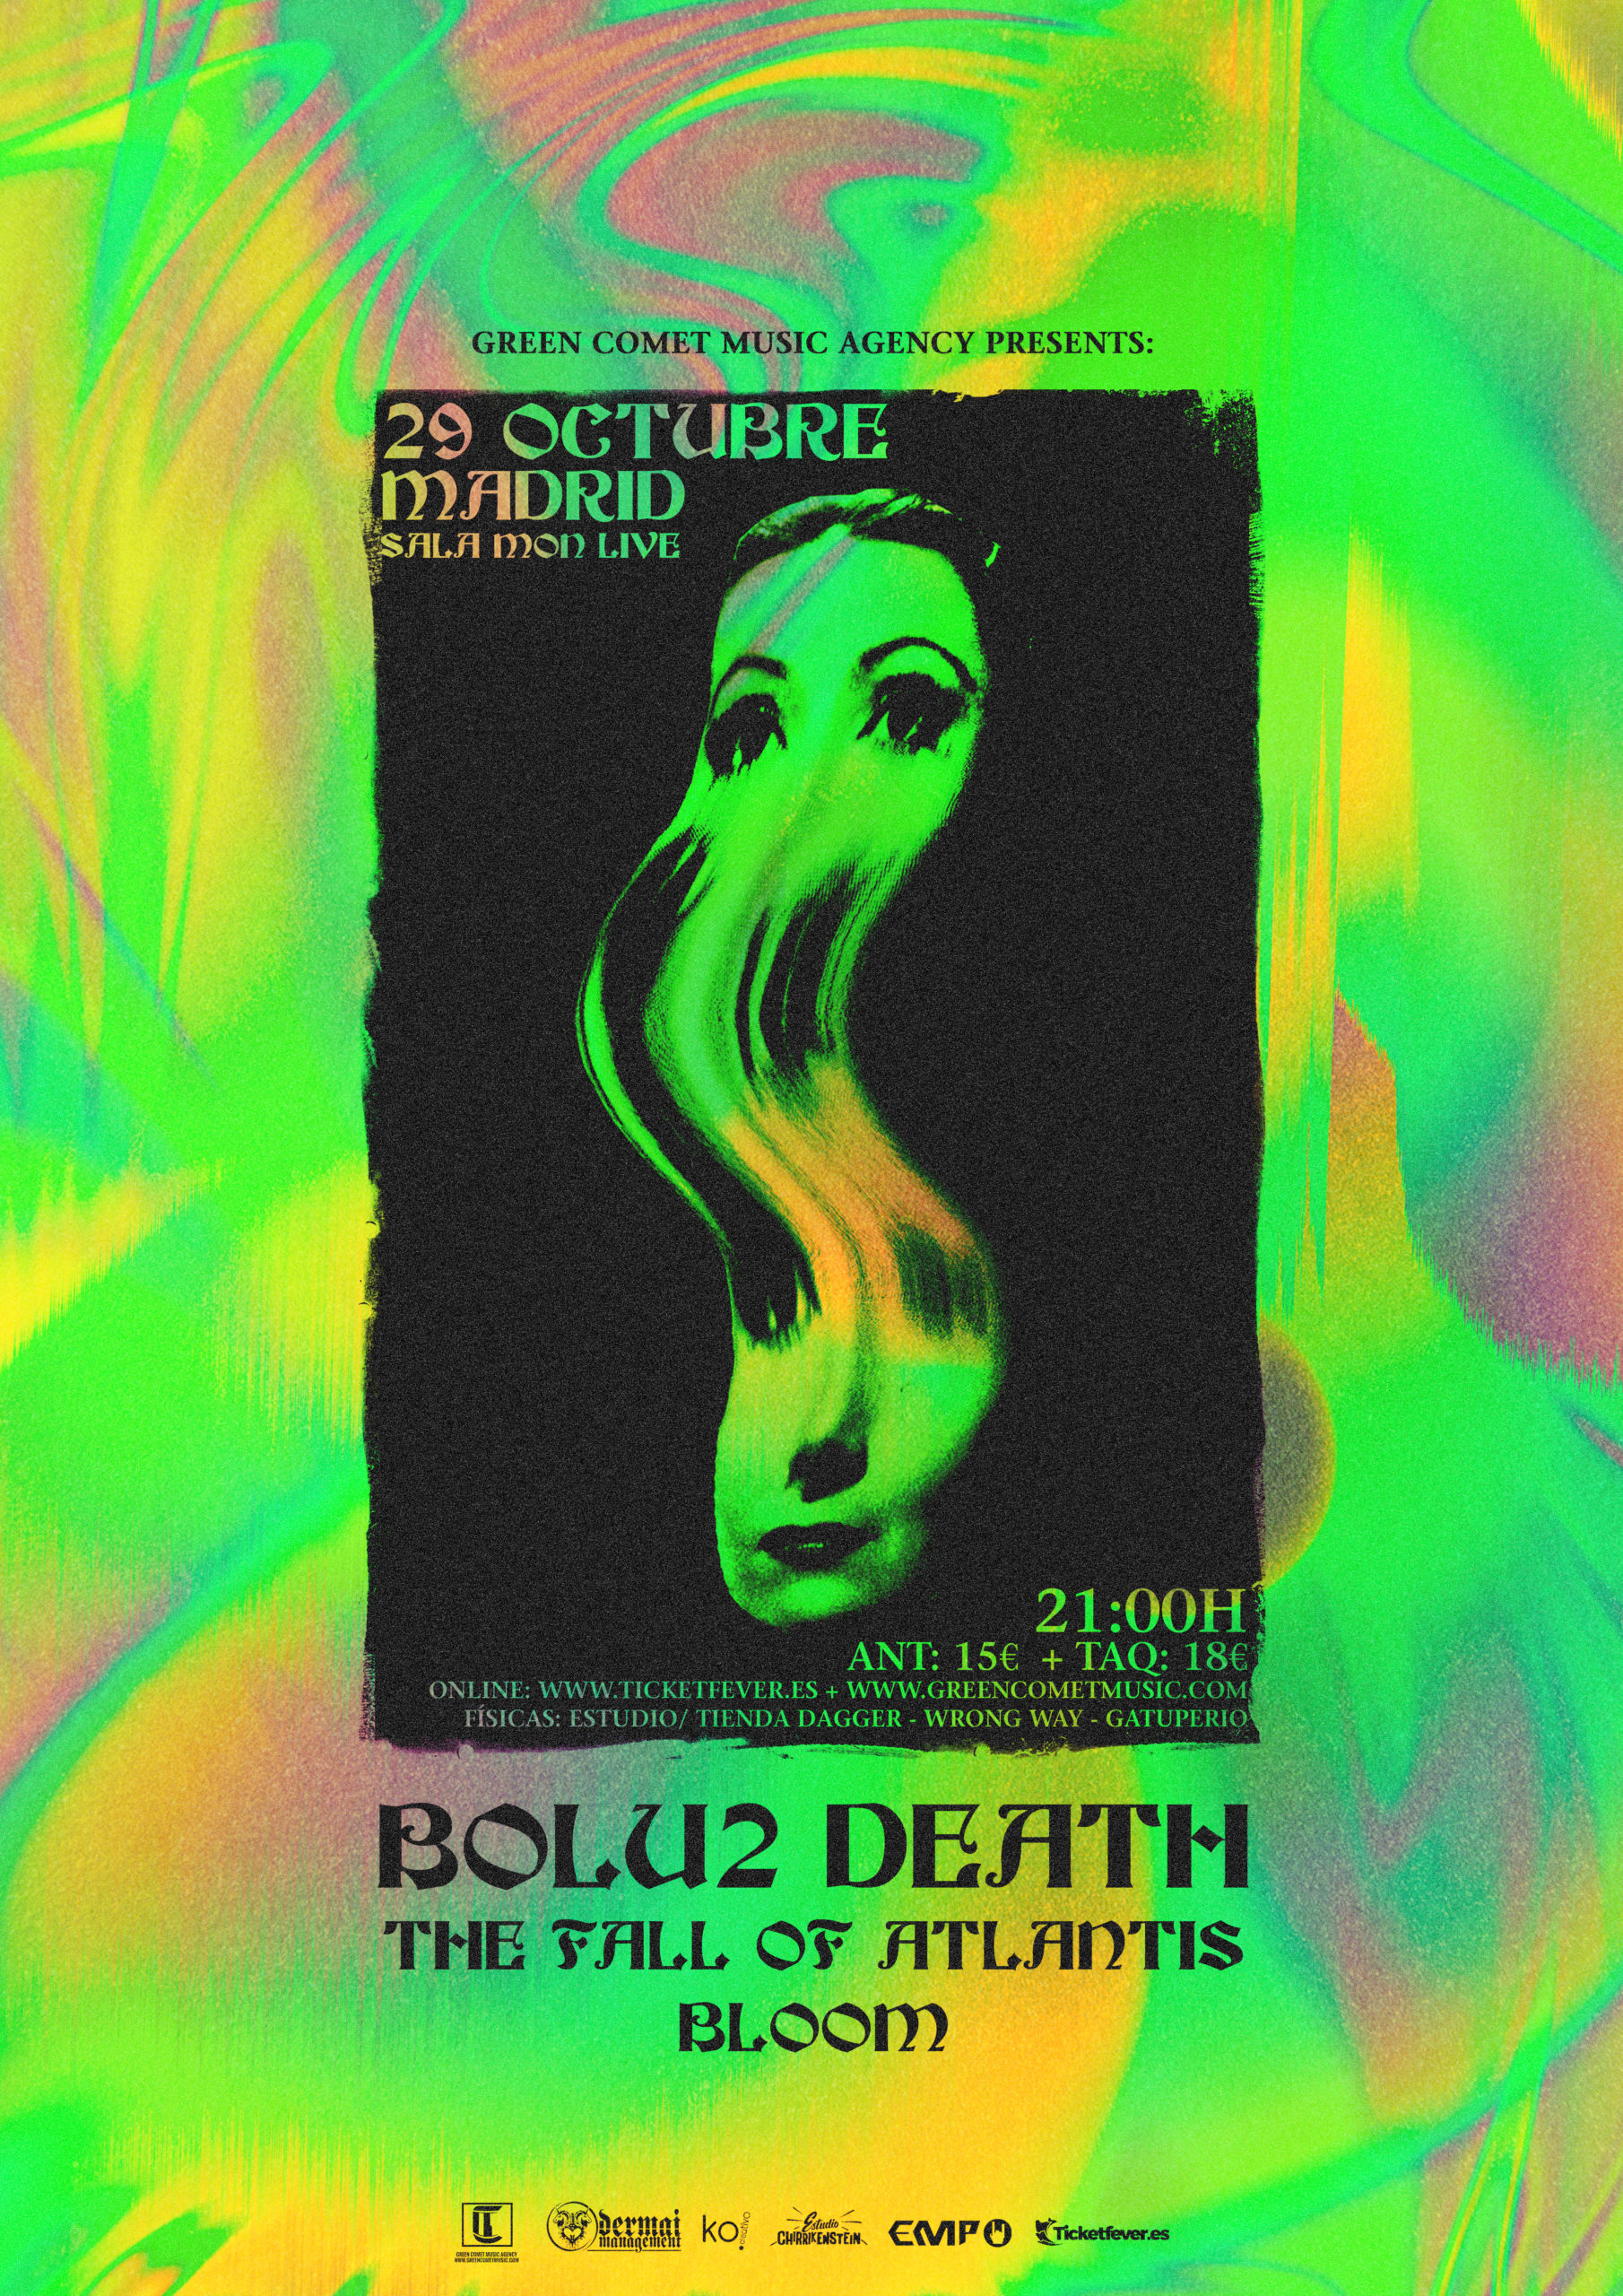 Bolu2 Death + The Fall Of Atlantis + Bloom actuarán el 29 de octubre en Madrid